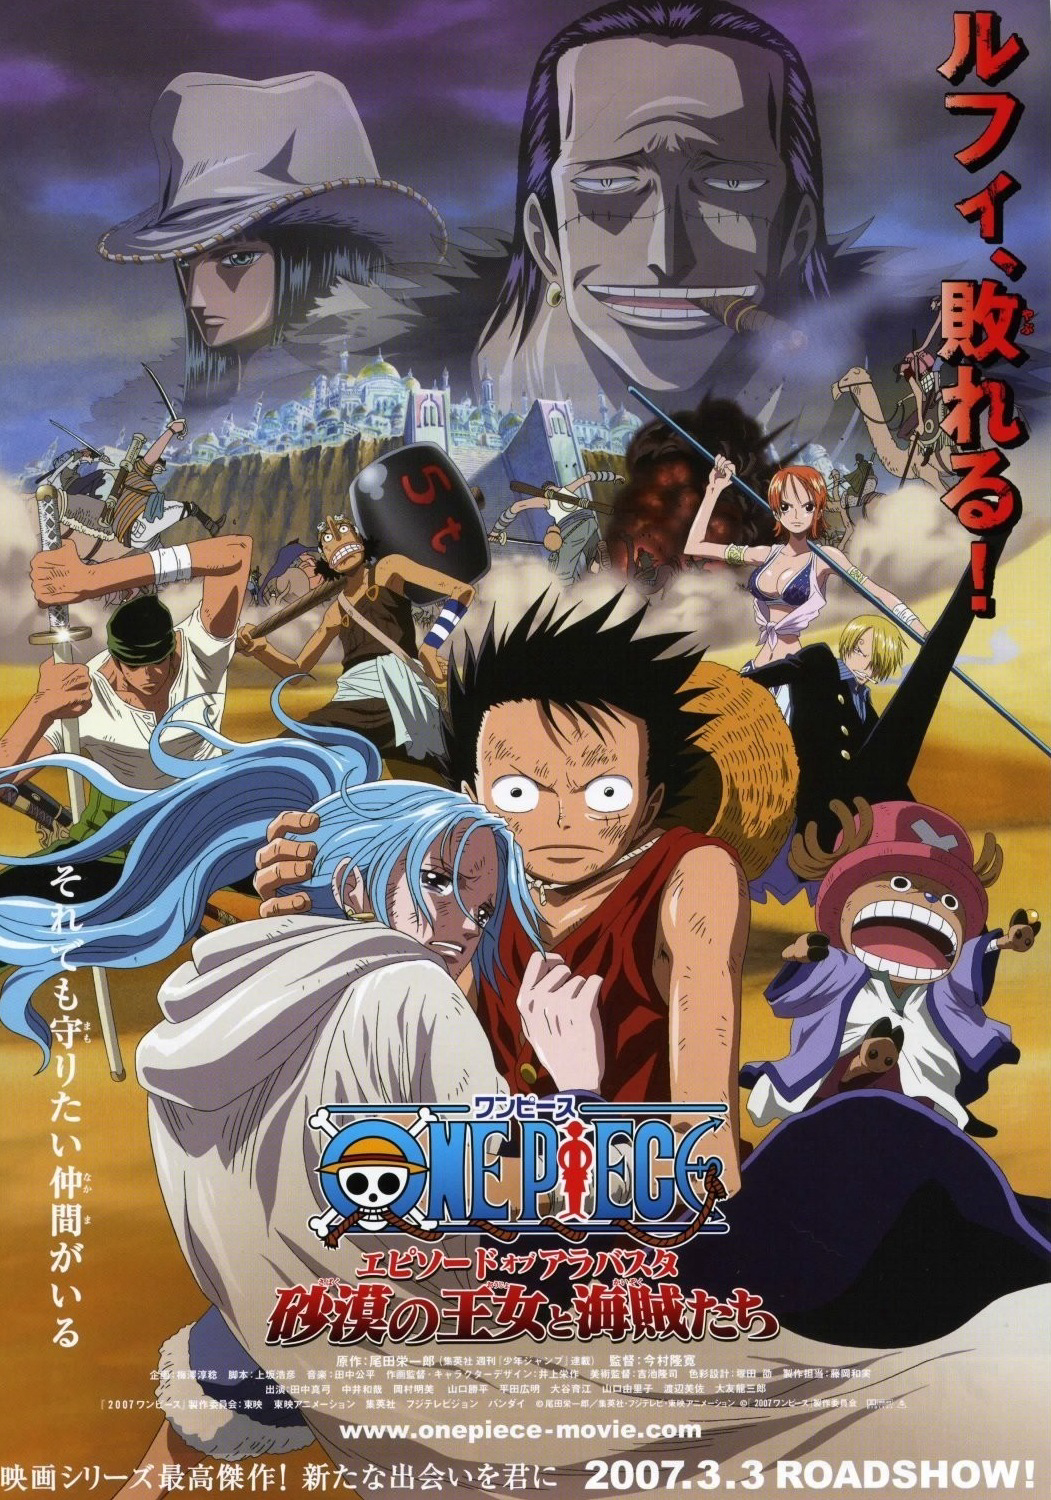 Xem Phim Vua Hải Tặc: Chương Alabasta - Công chúa sa mạc và hải tặc (One Piece the Movie Episode of Alabasta The Queen of the Desert and the Pirate (Movie 8))